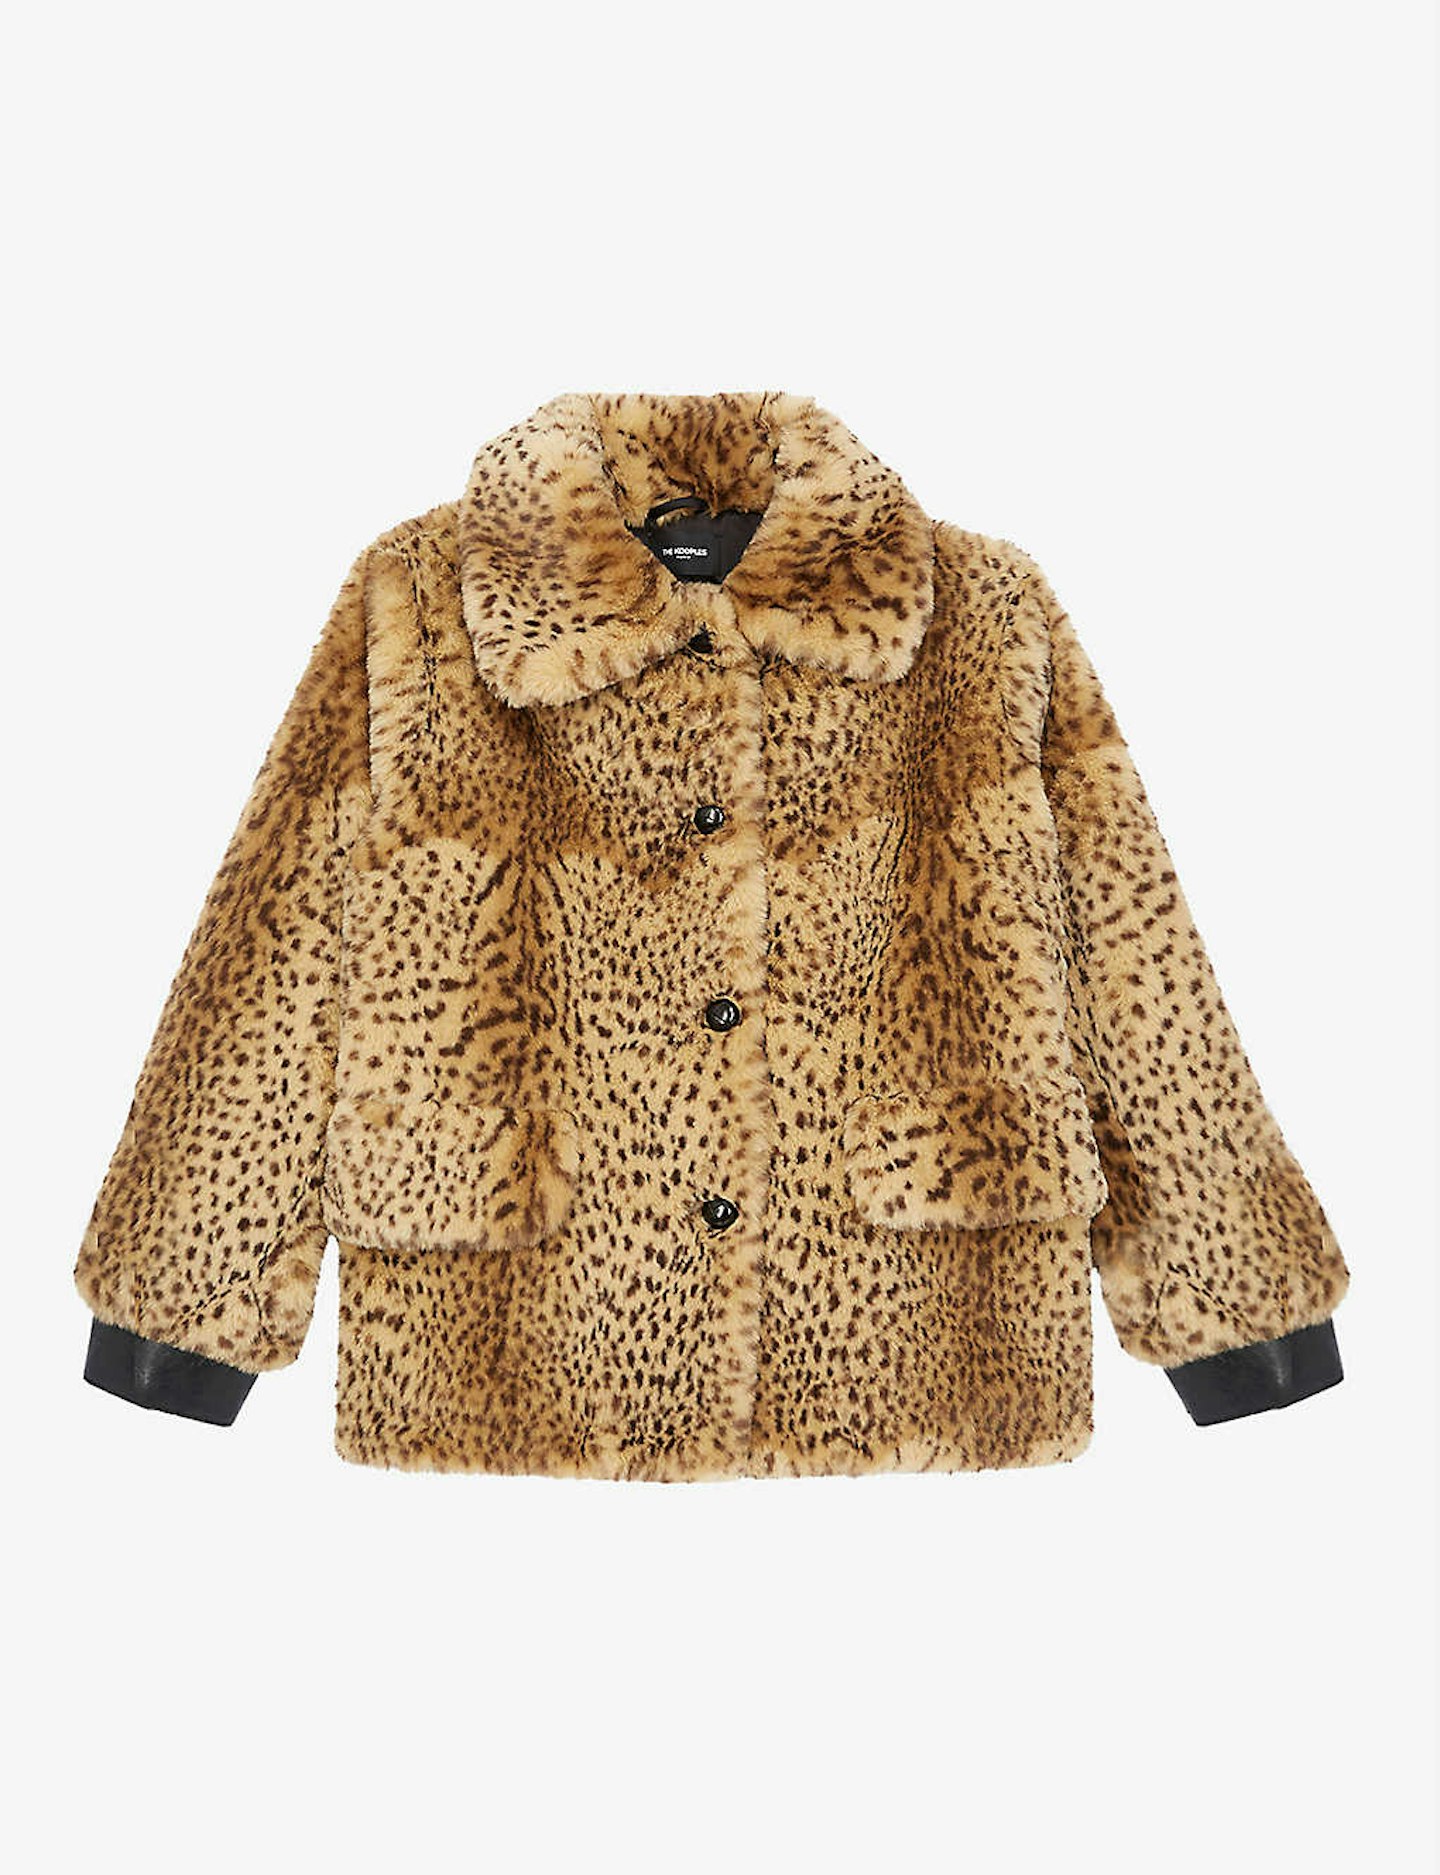 The Kooples, Cropped Leopard-Print Faux-Fur Coat, WAS £455 NOW £318.50